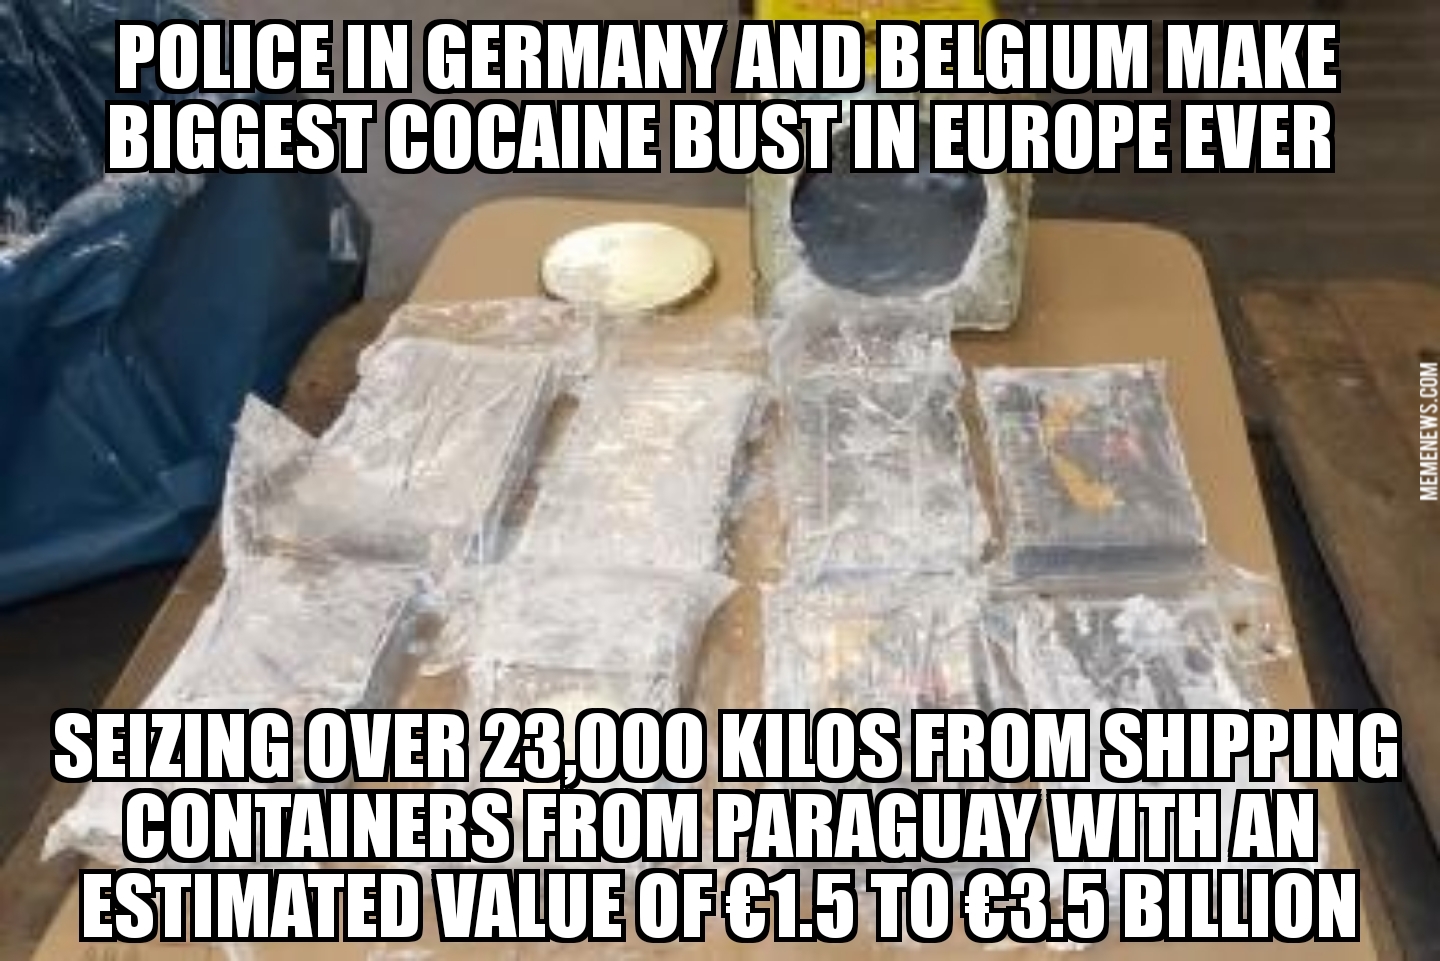 German, Belgian police make biggest cocaine bust in Europe